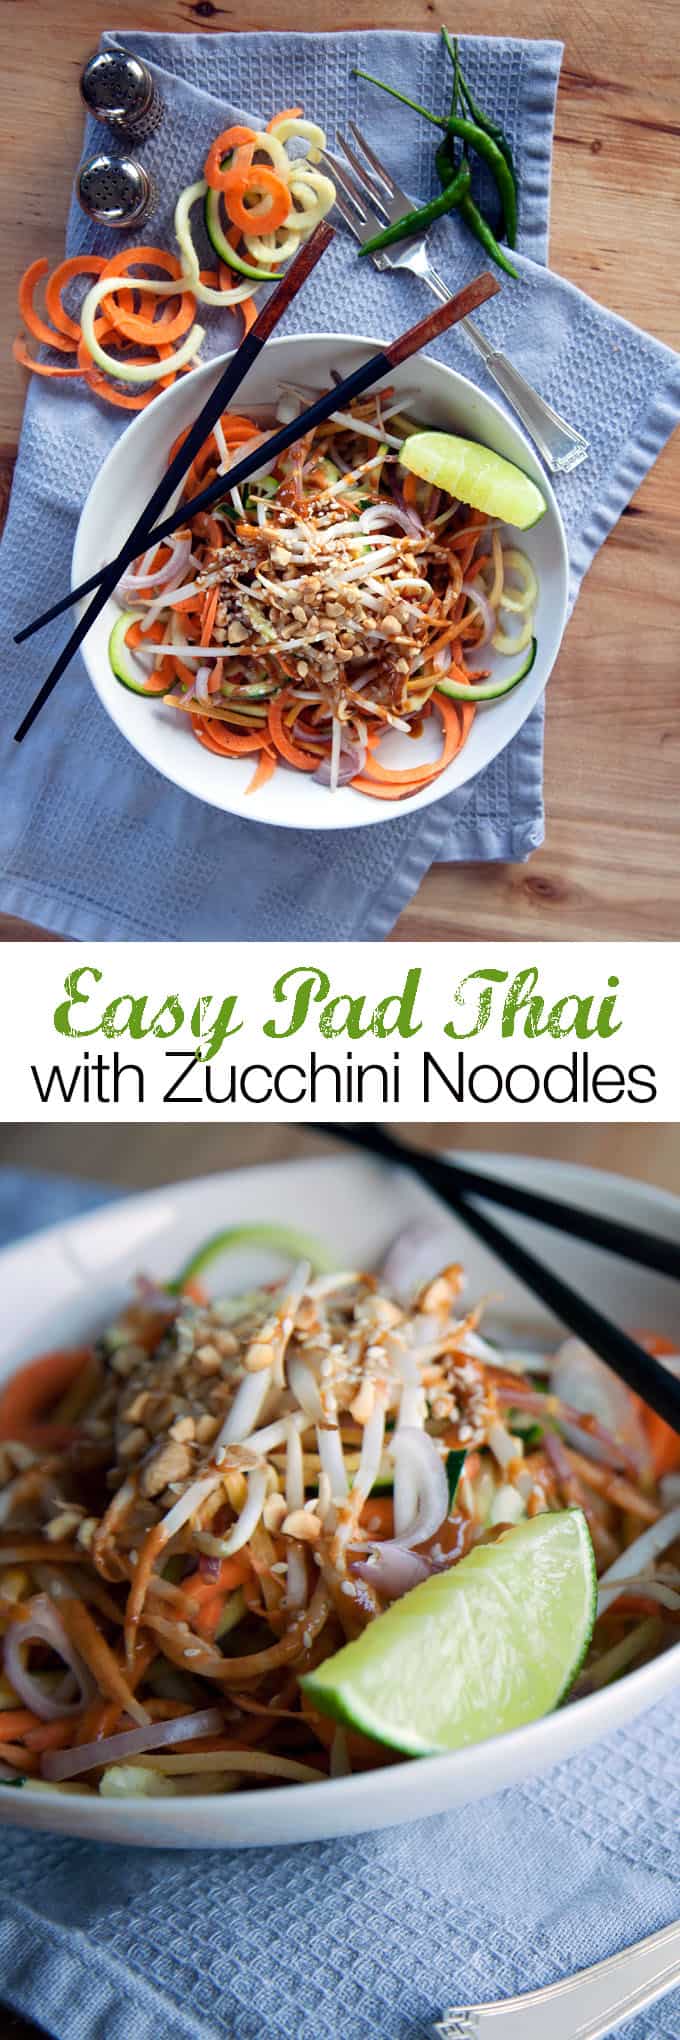 Easy Vegan Pad thai zucchini noodles